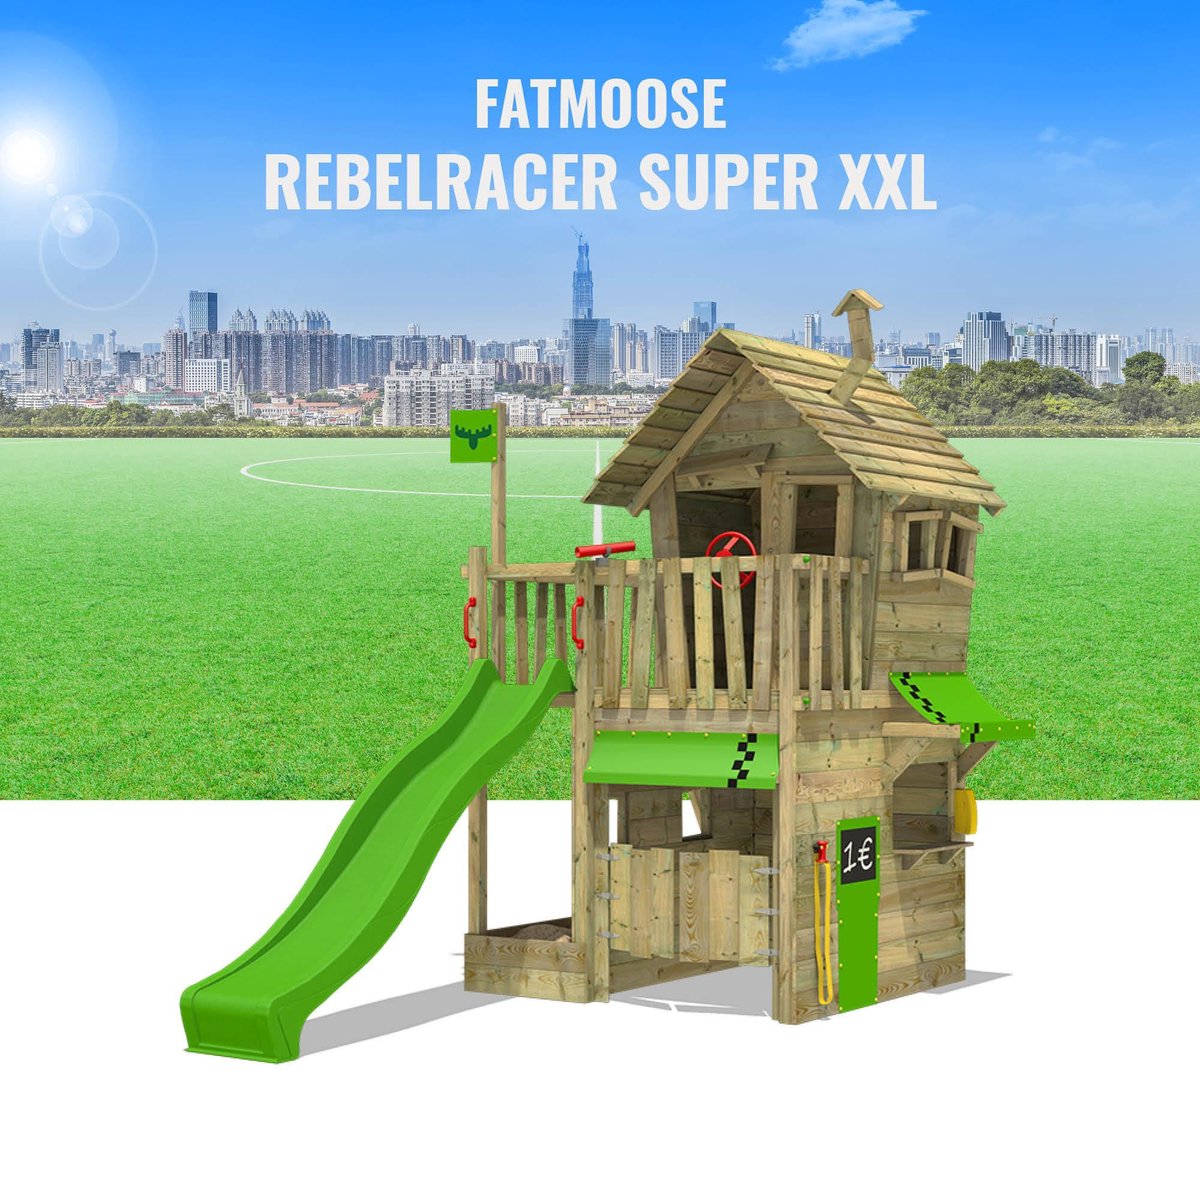 FATMOOSE RebelRacer Super XXL - Speeltoestel | bol.com